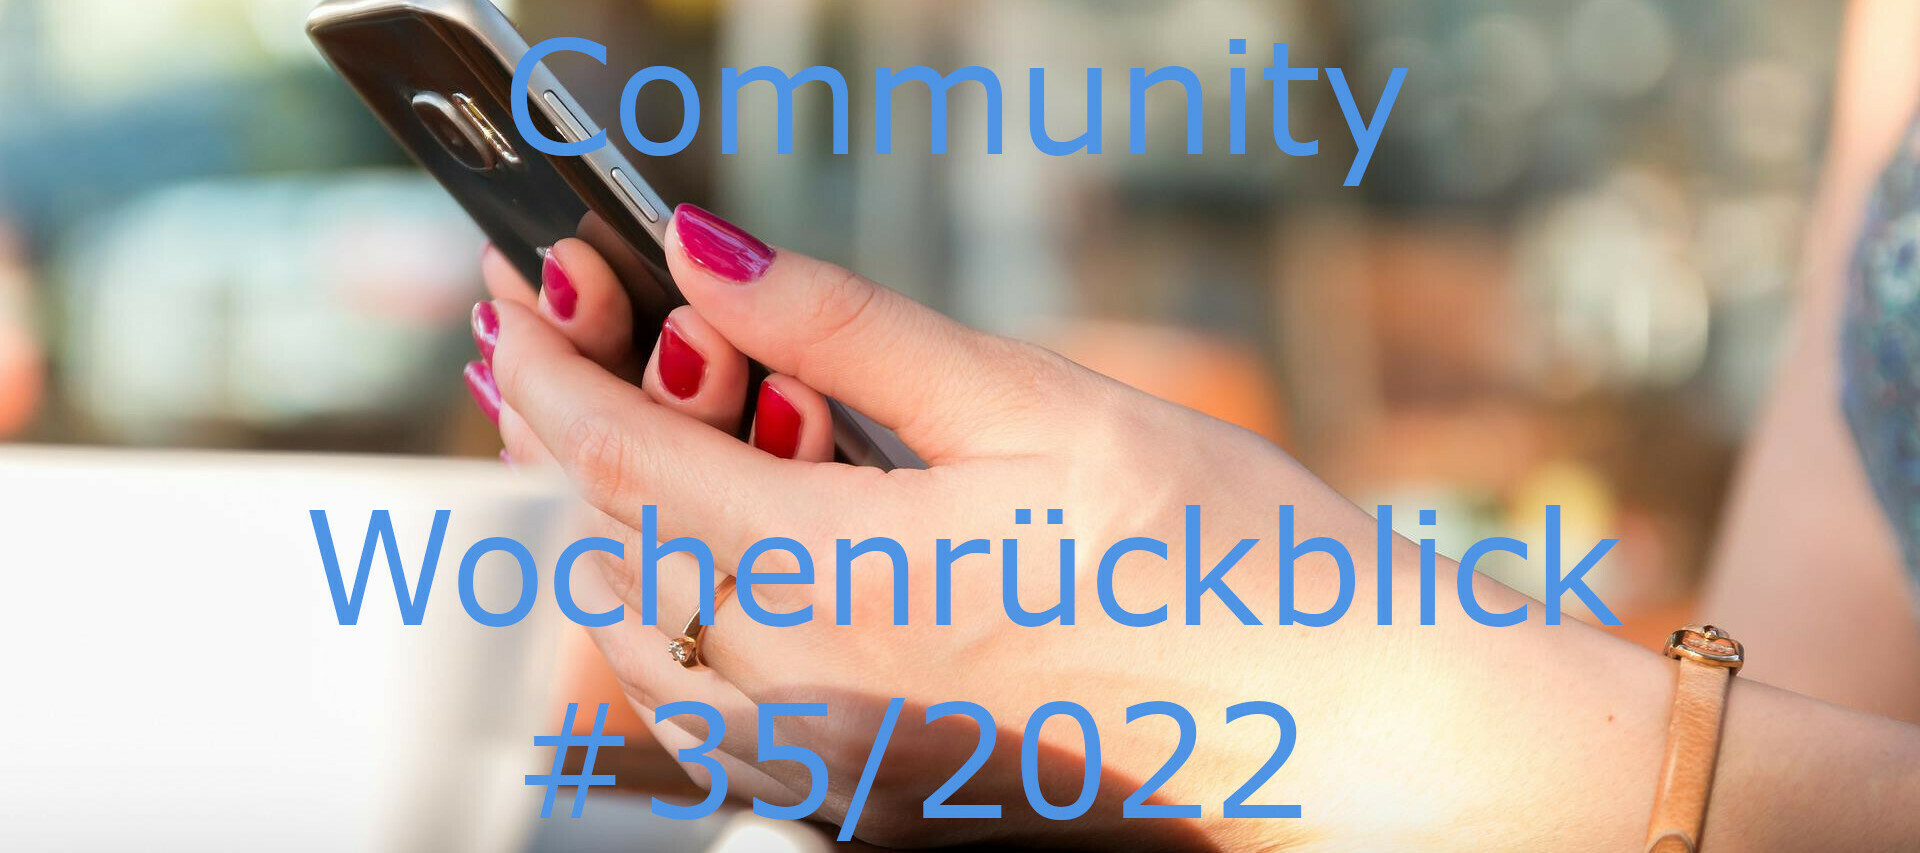 Community Wochenrückblick #35/2022